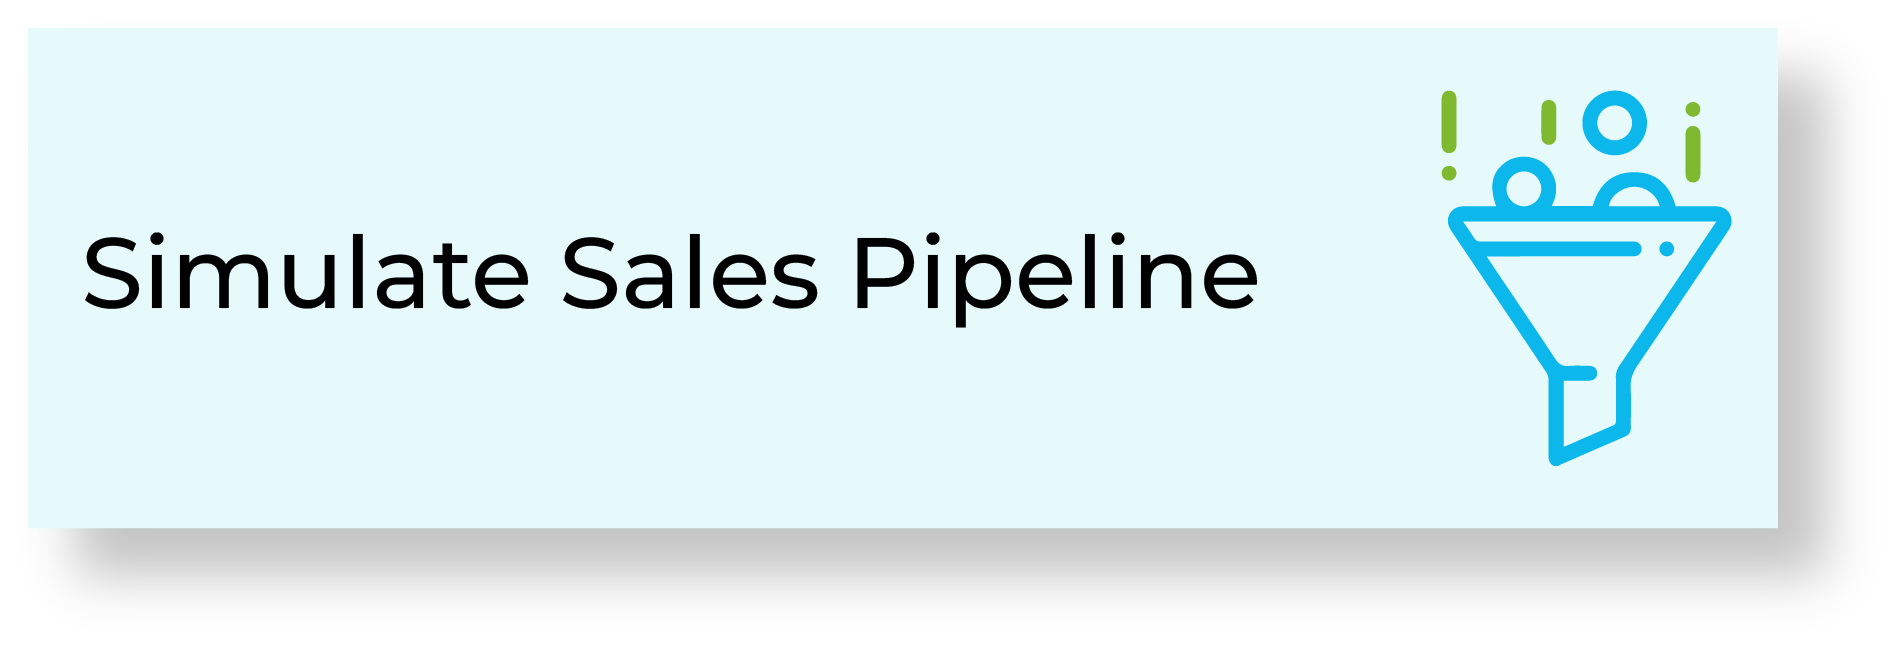 _Simulate Sales Pipeline